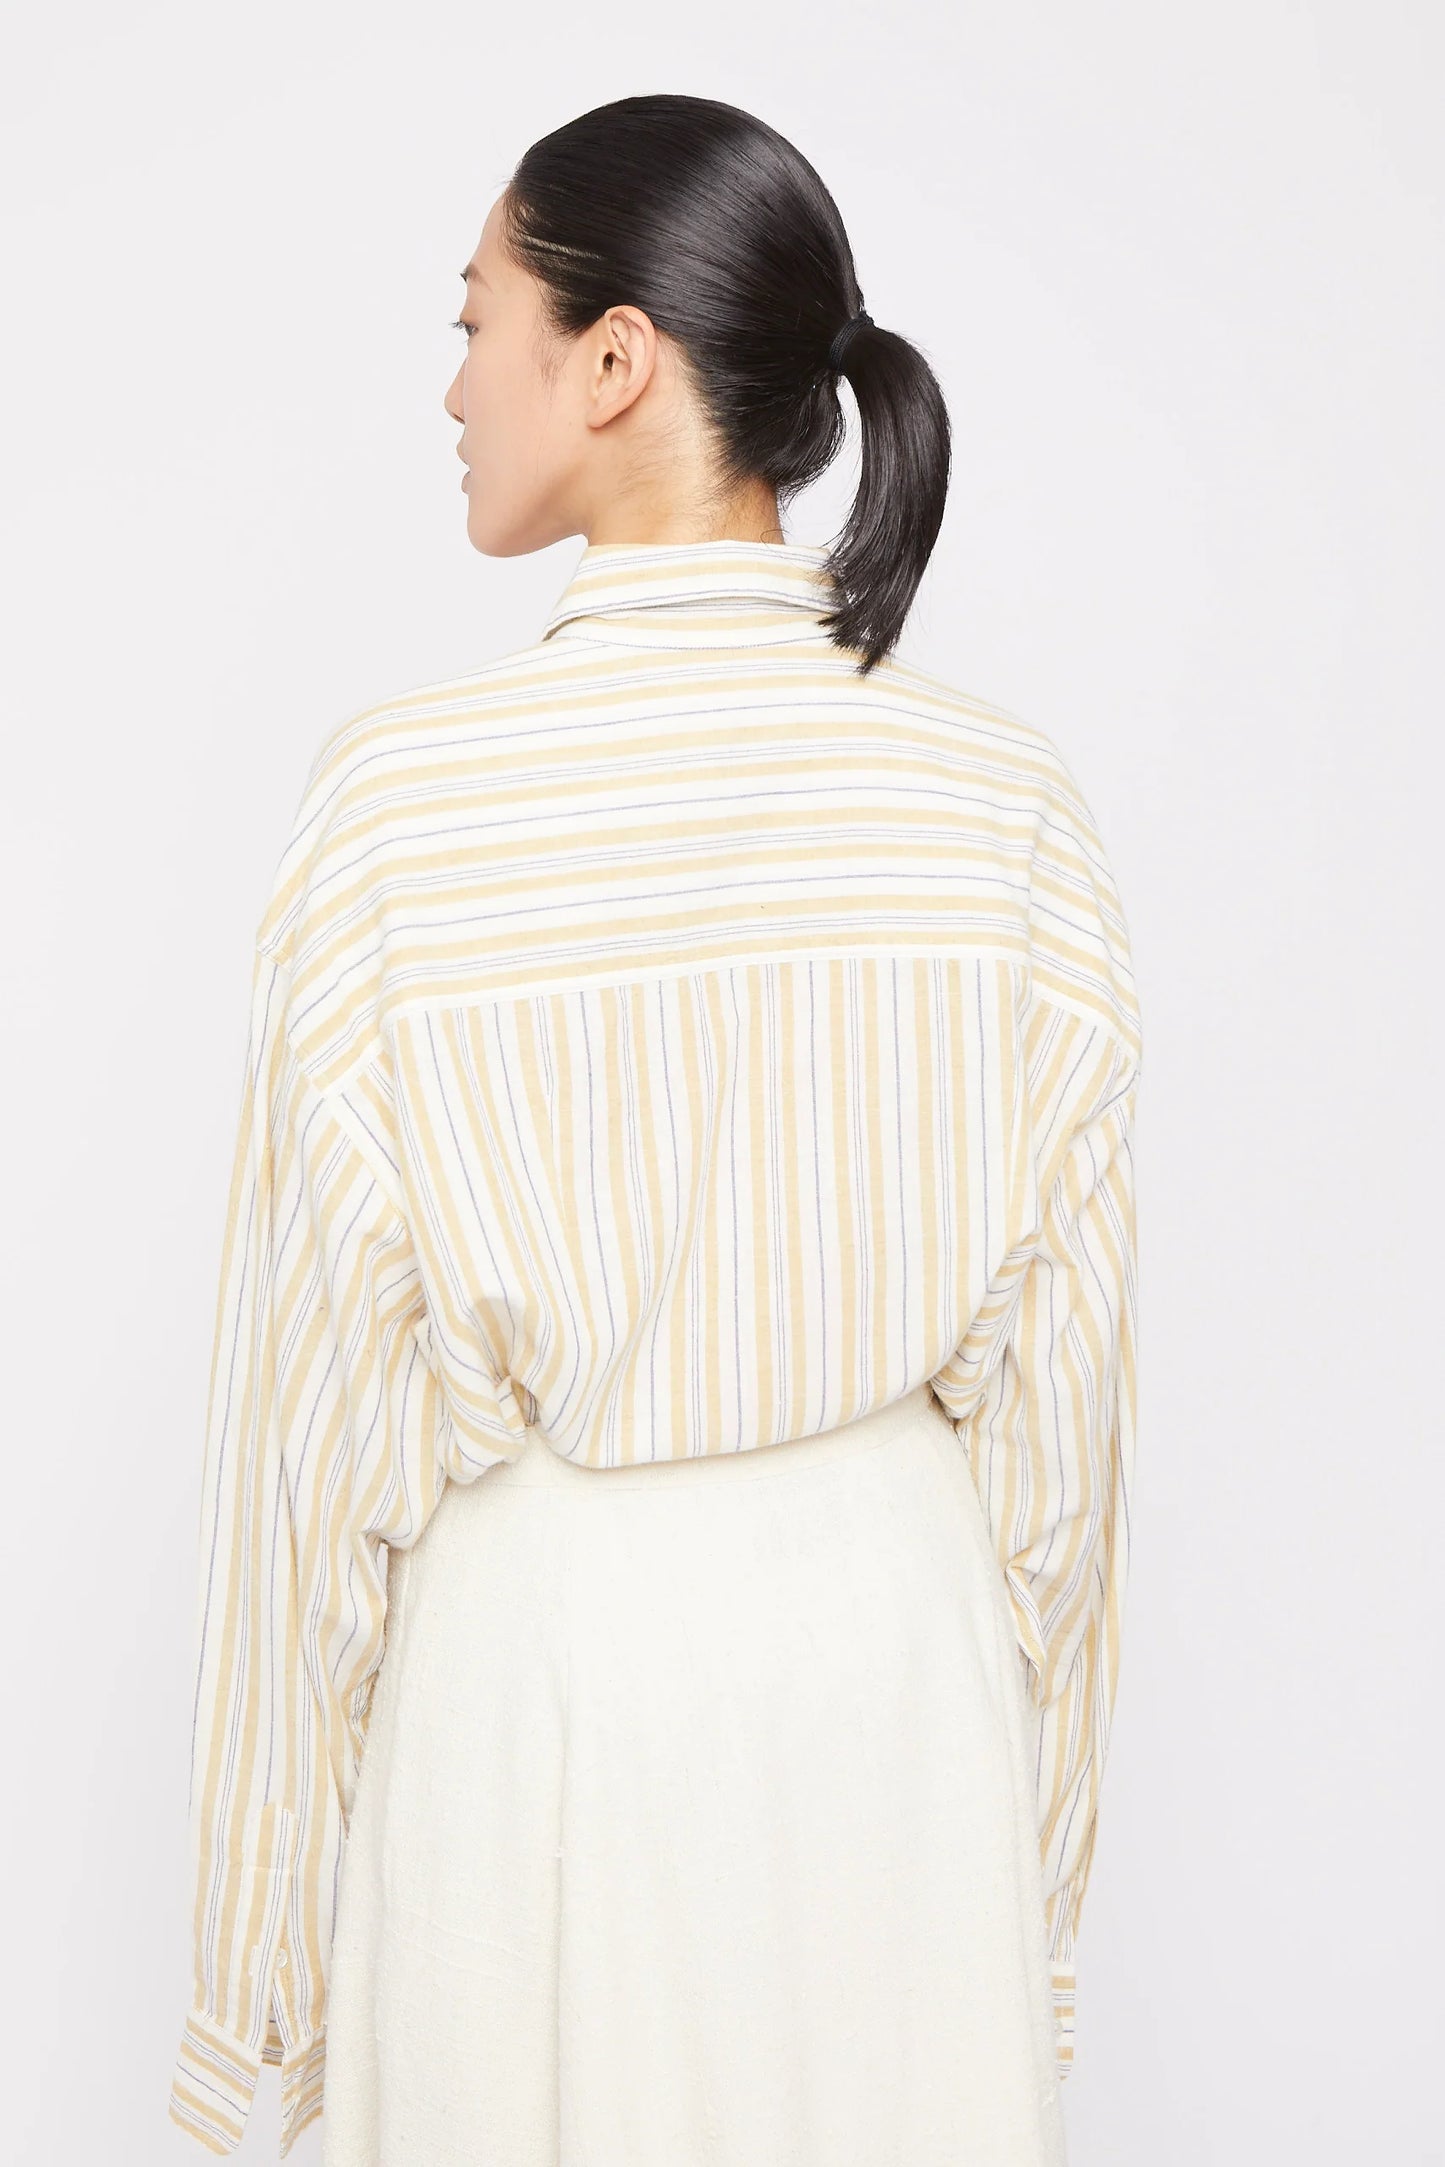 XP | Laurence Bras chemise à rayures Seberg yellow stripes